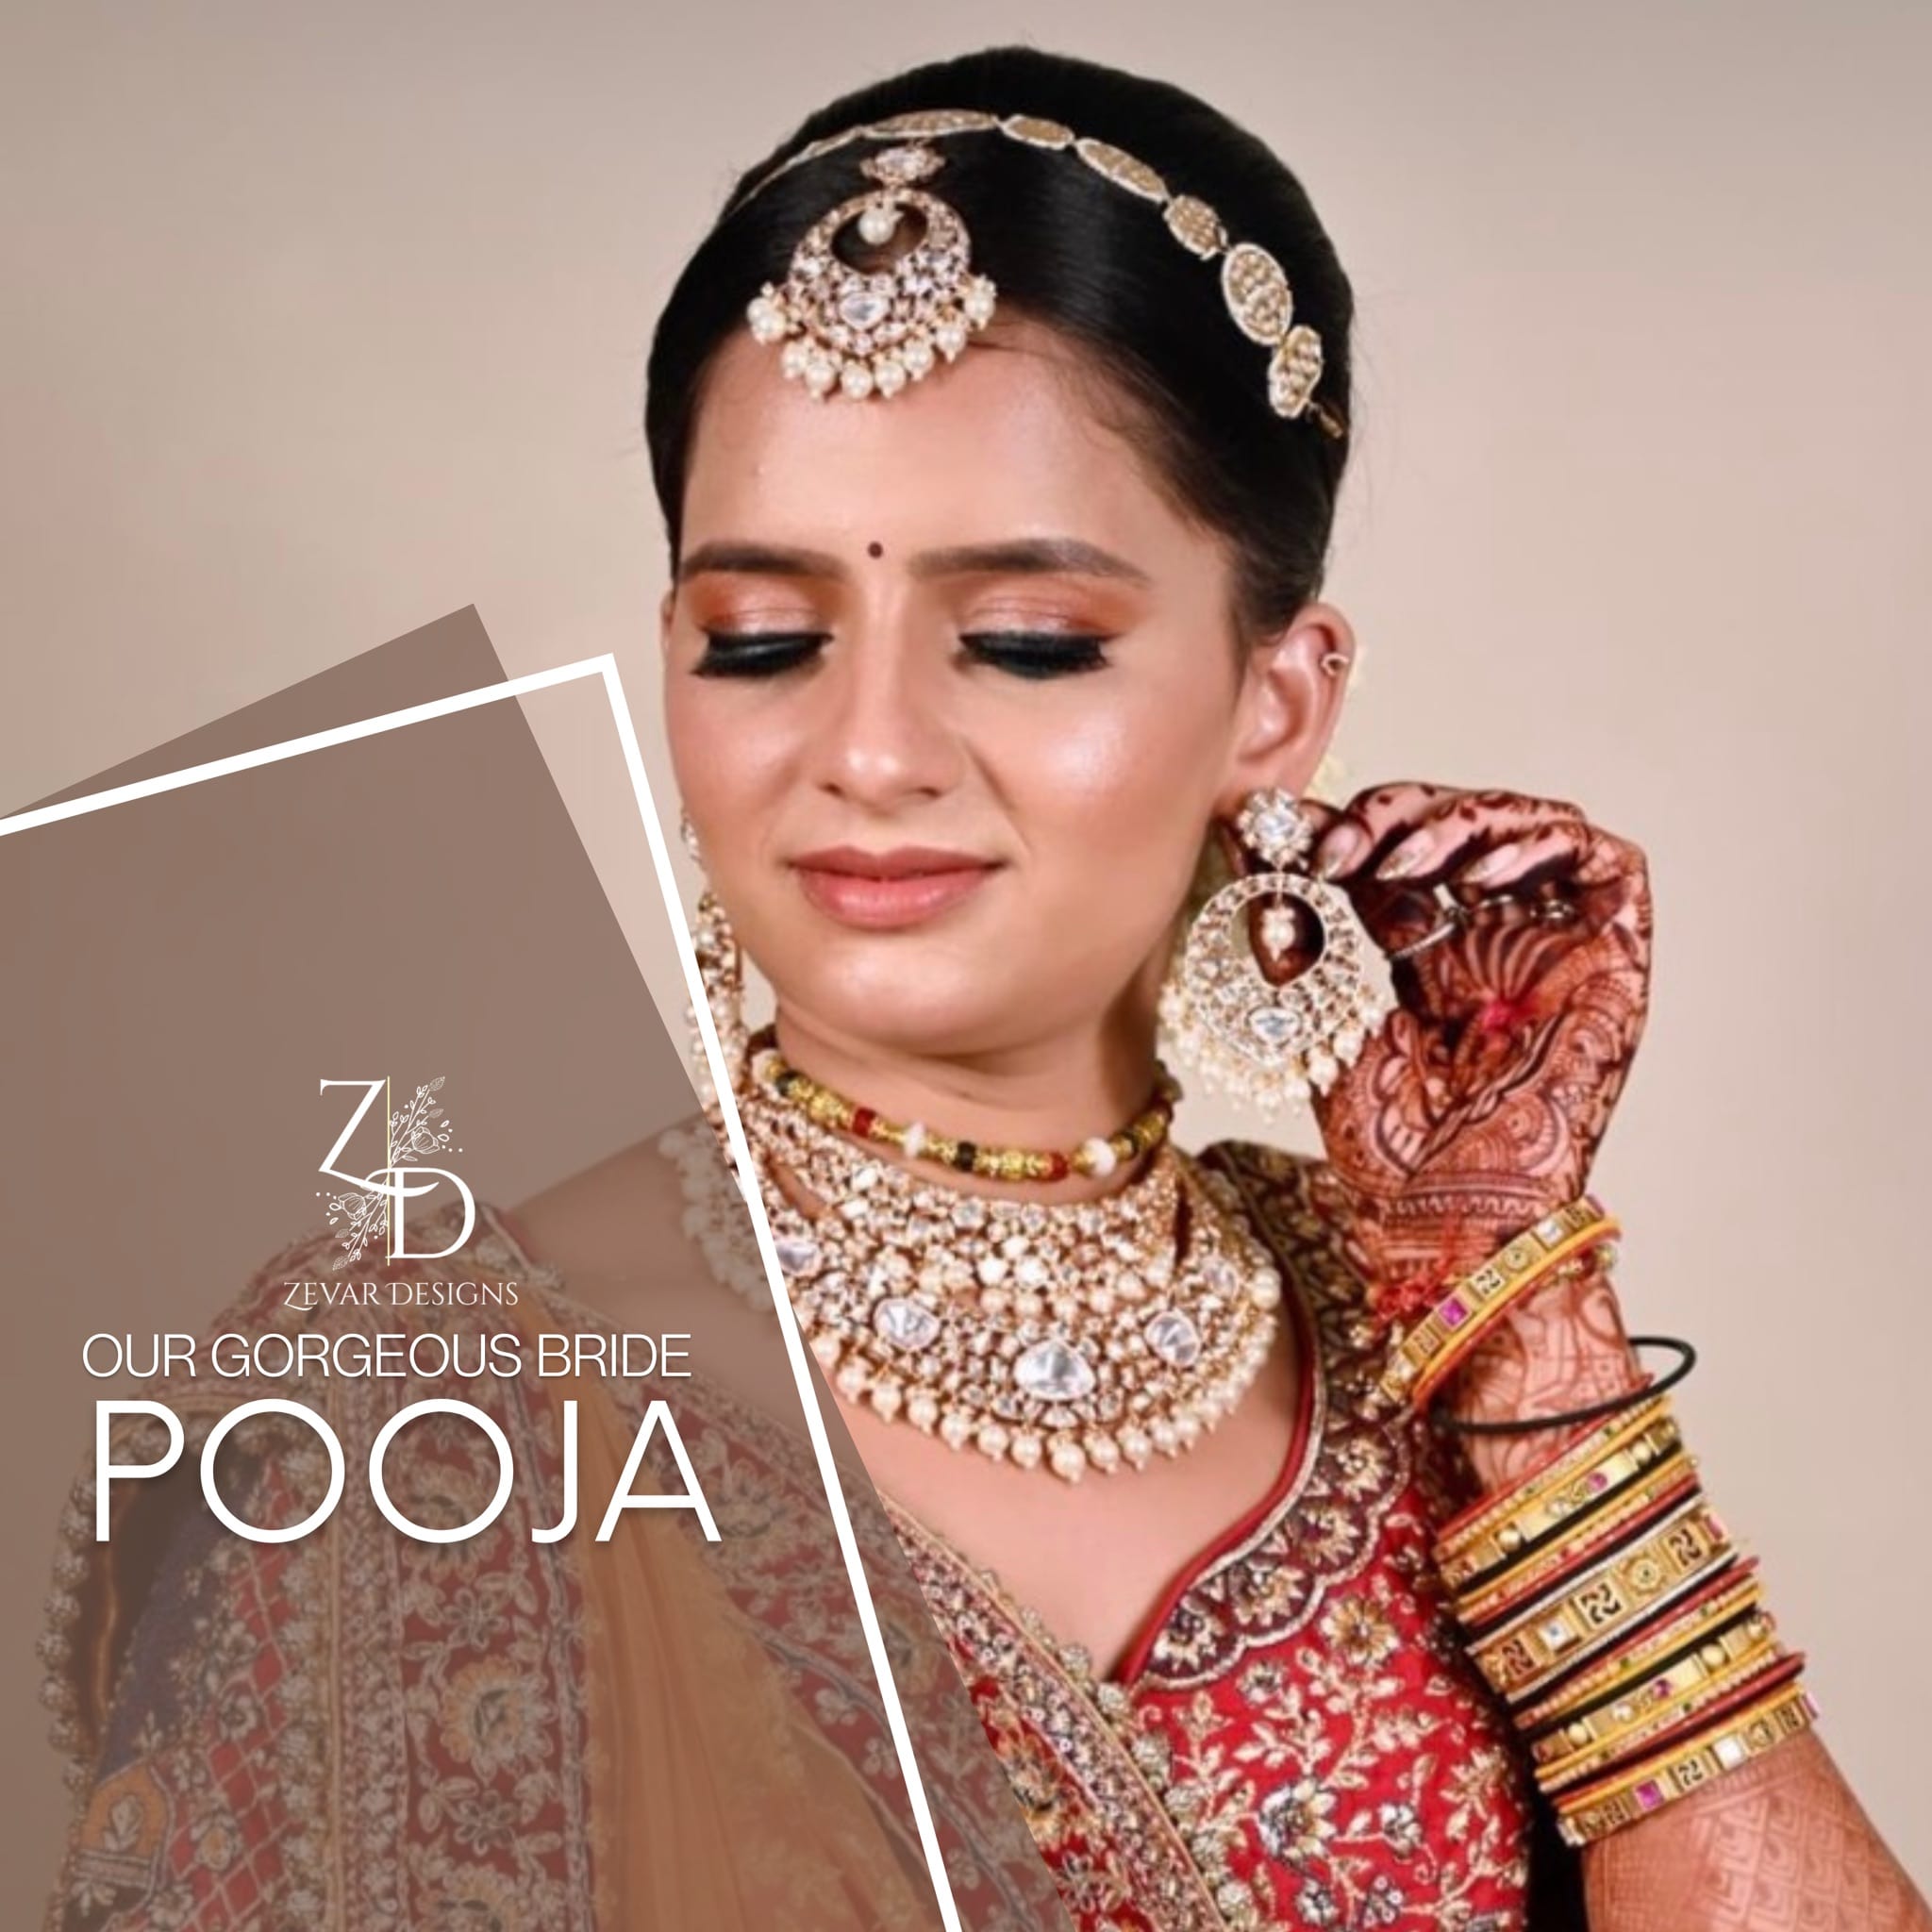 Pooja in Zevar Designs Jewelry